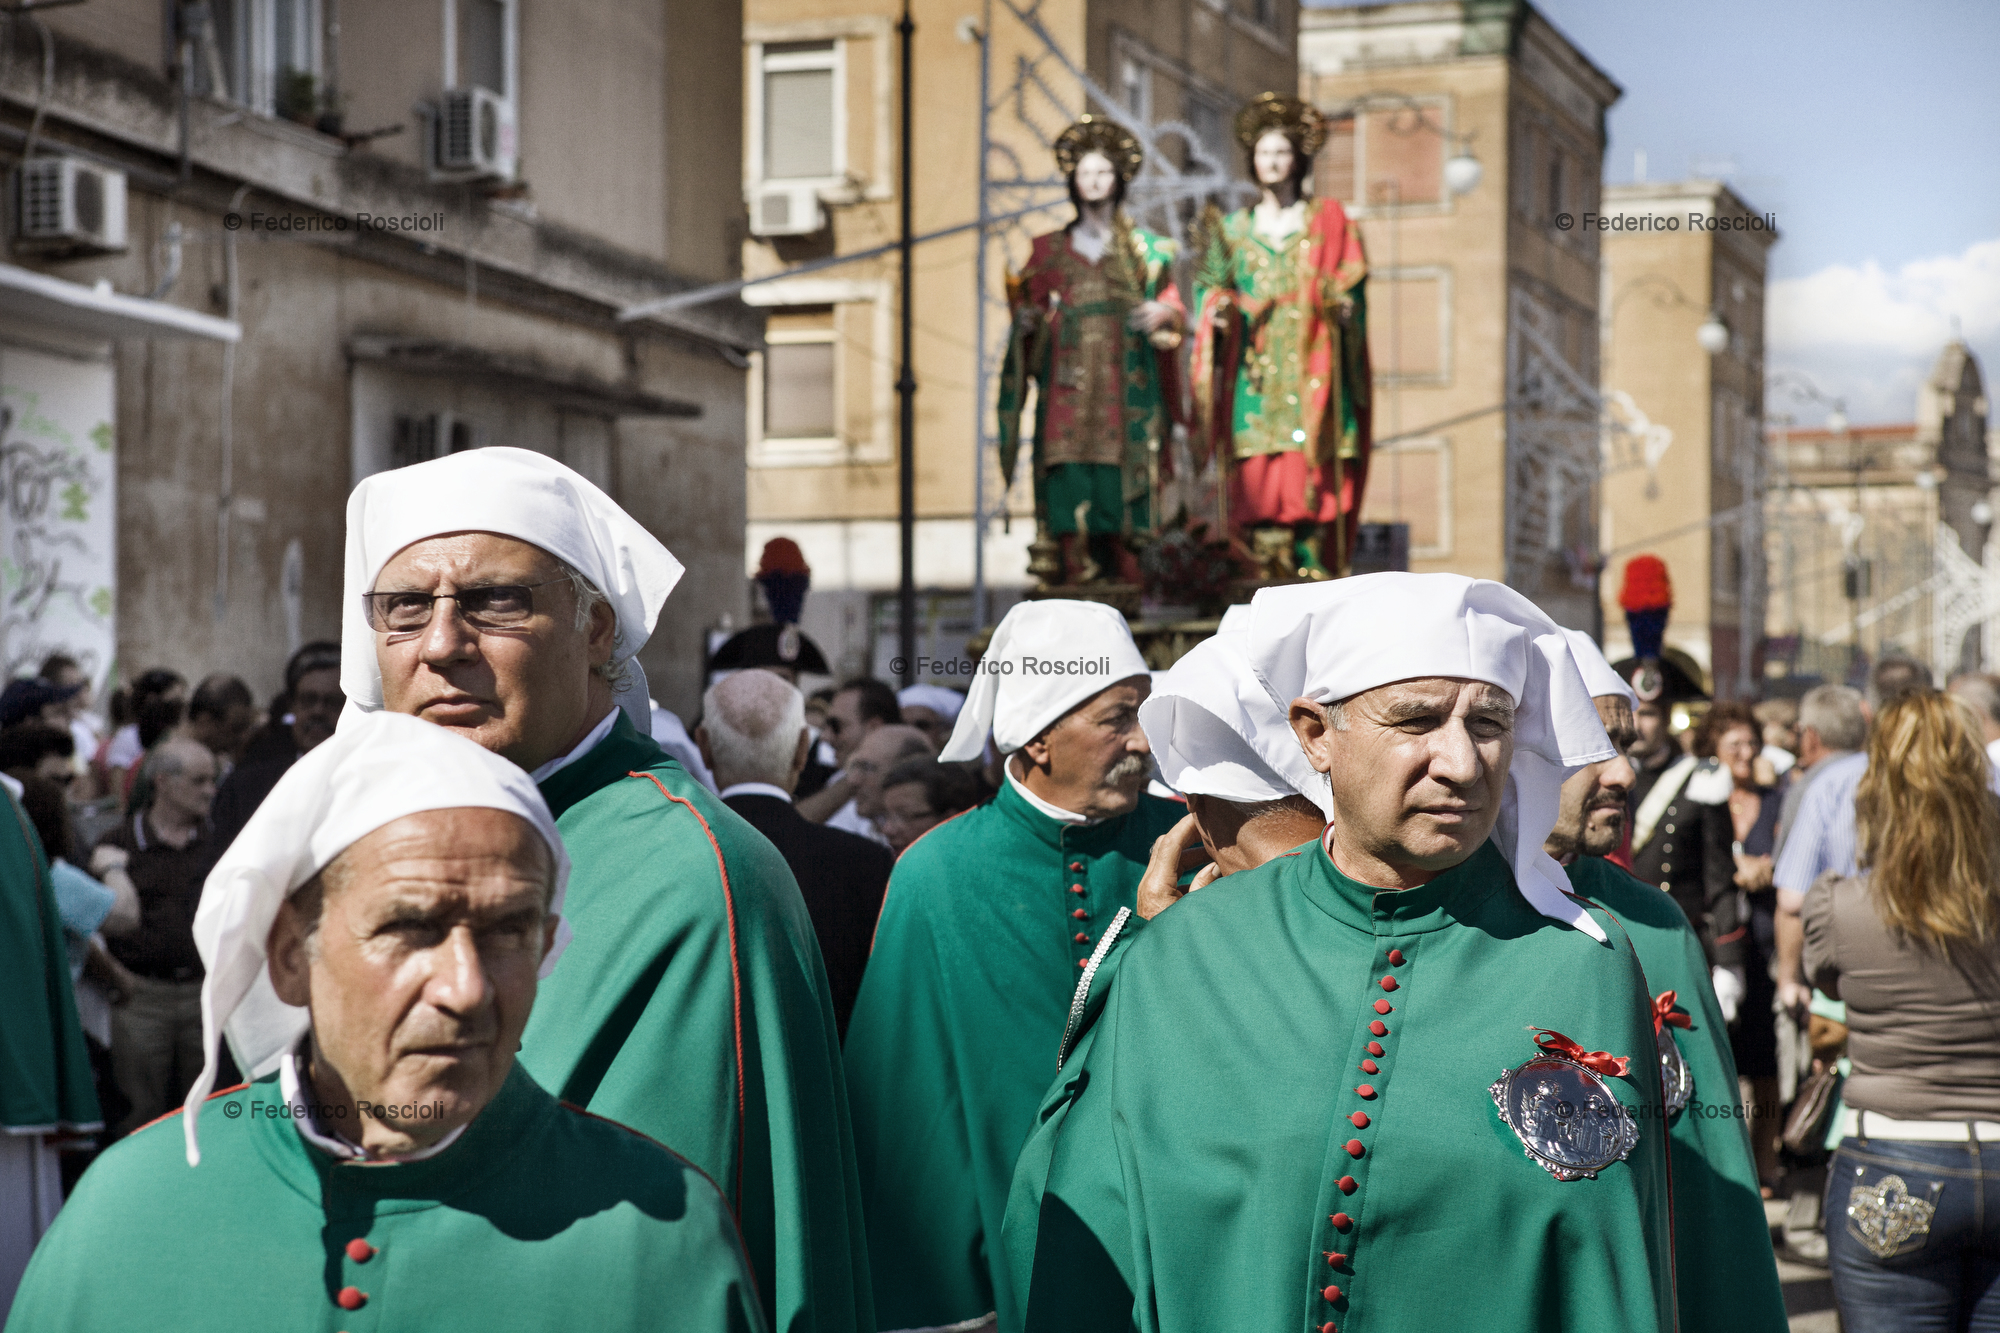 Taranto, Italy, September 26, 2013. Procession of the Saints Cosma and Damiano in Città Vecchia of Taranto.